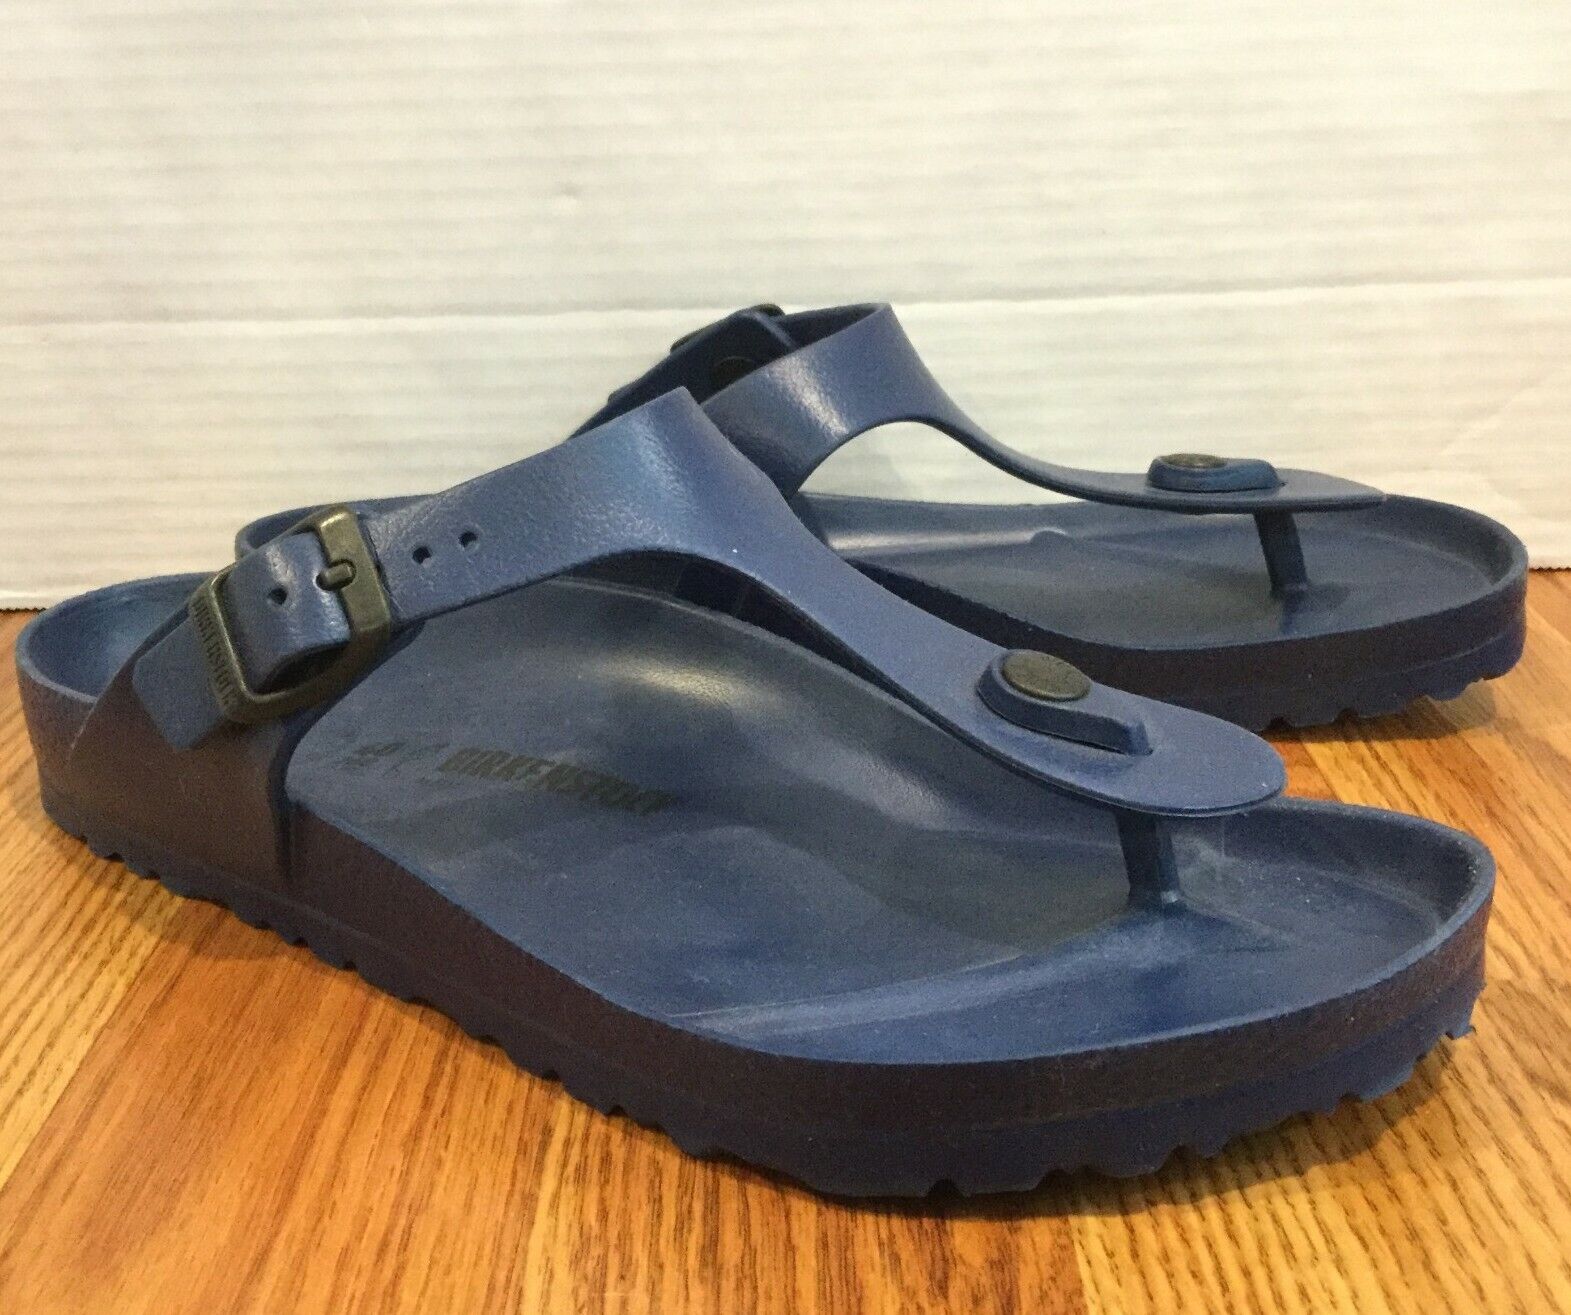 birkenstock gizeh rubber sandals